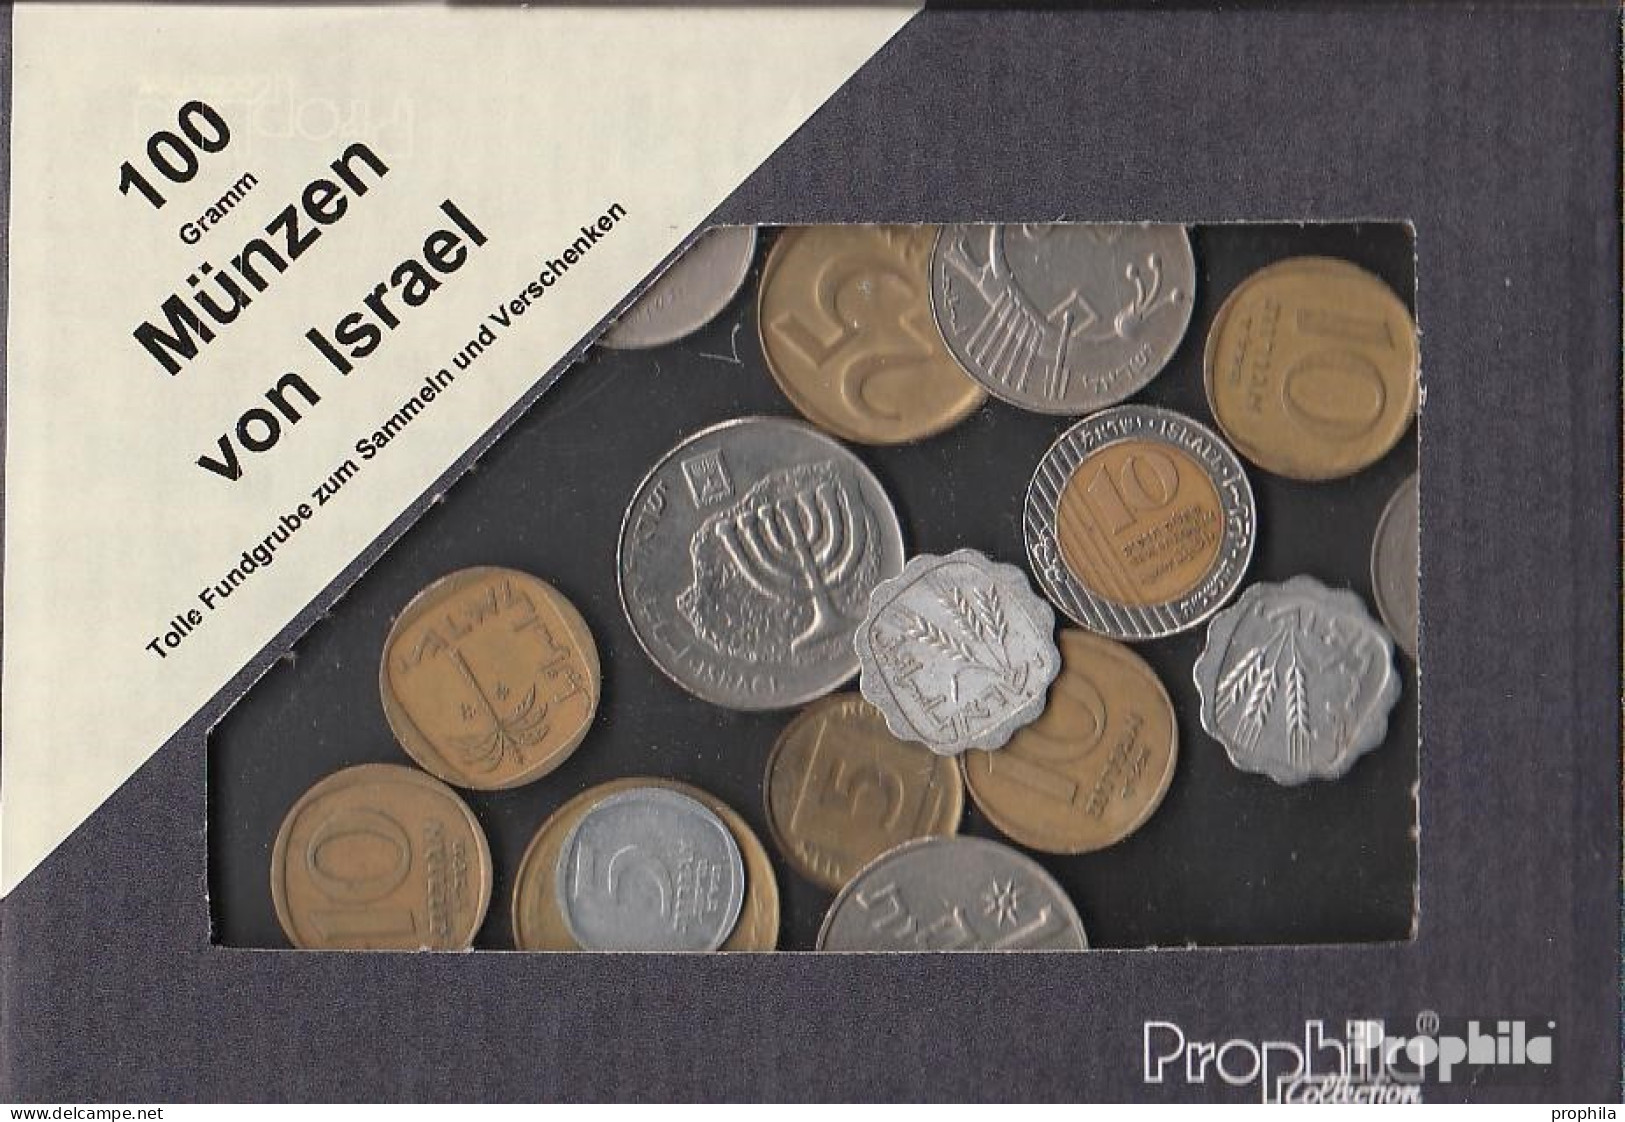 Israel 100 Gramm Münzkiloware - Kiloware - Münzen